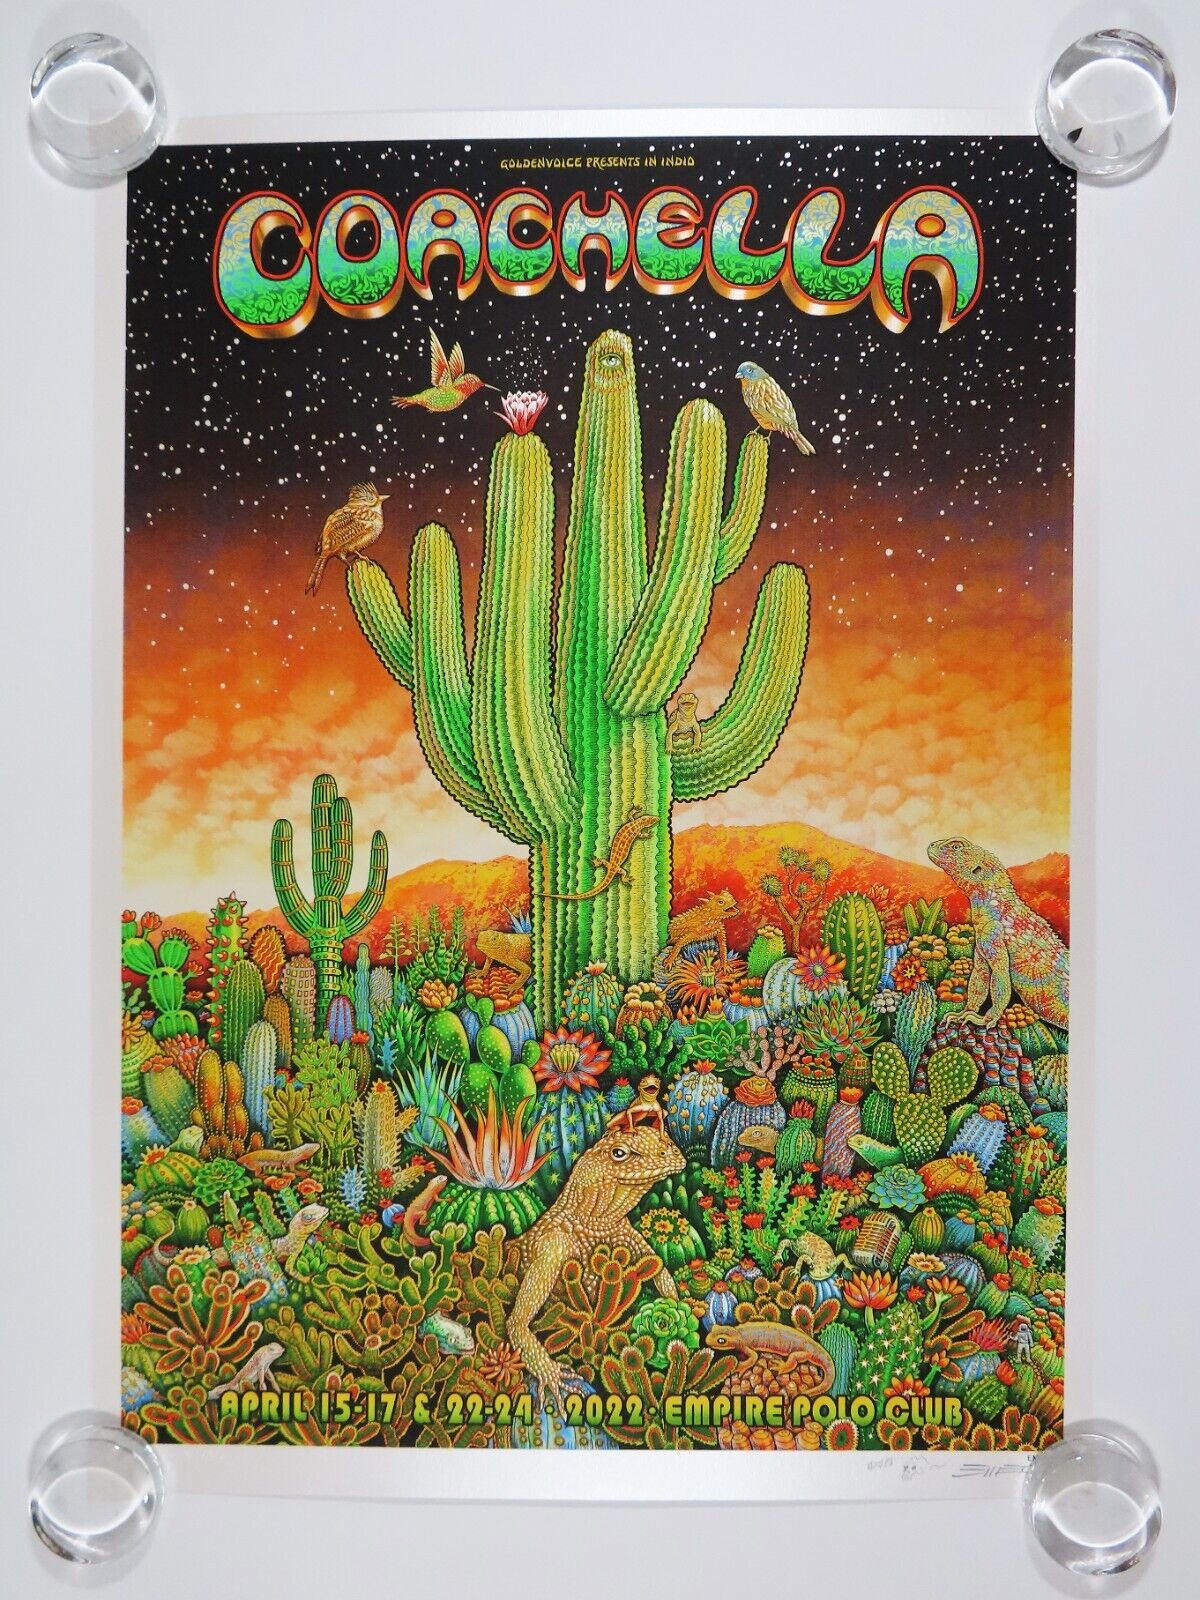 Coachella Indio 22 by Emek DogStreets